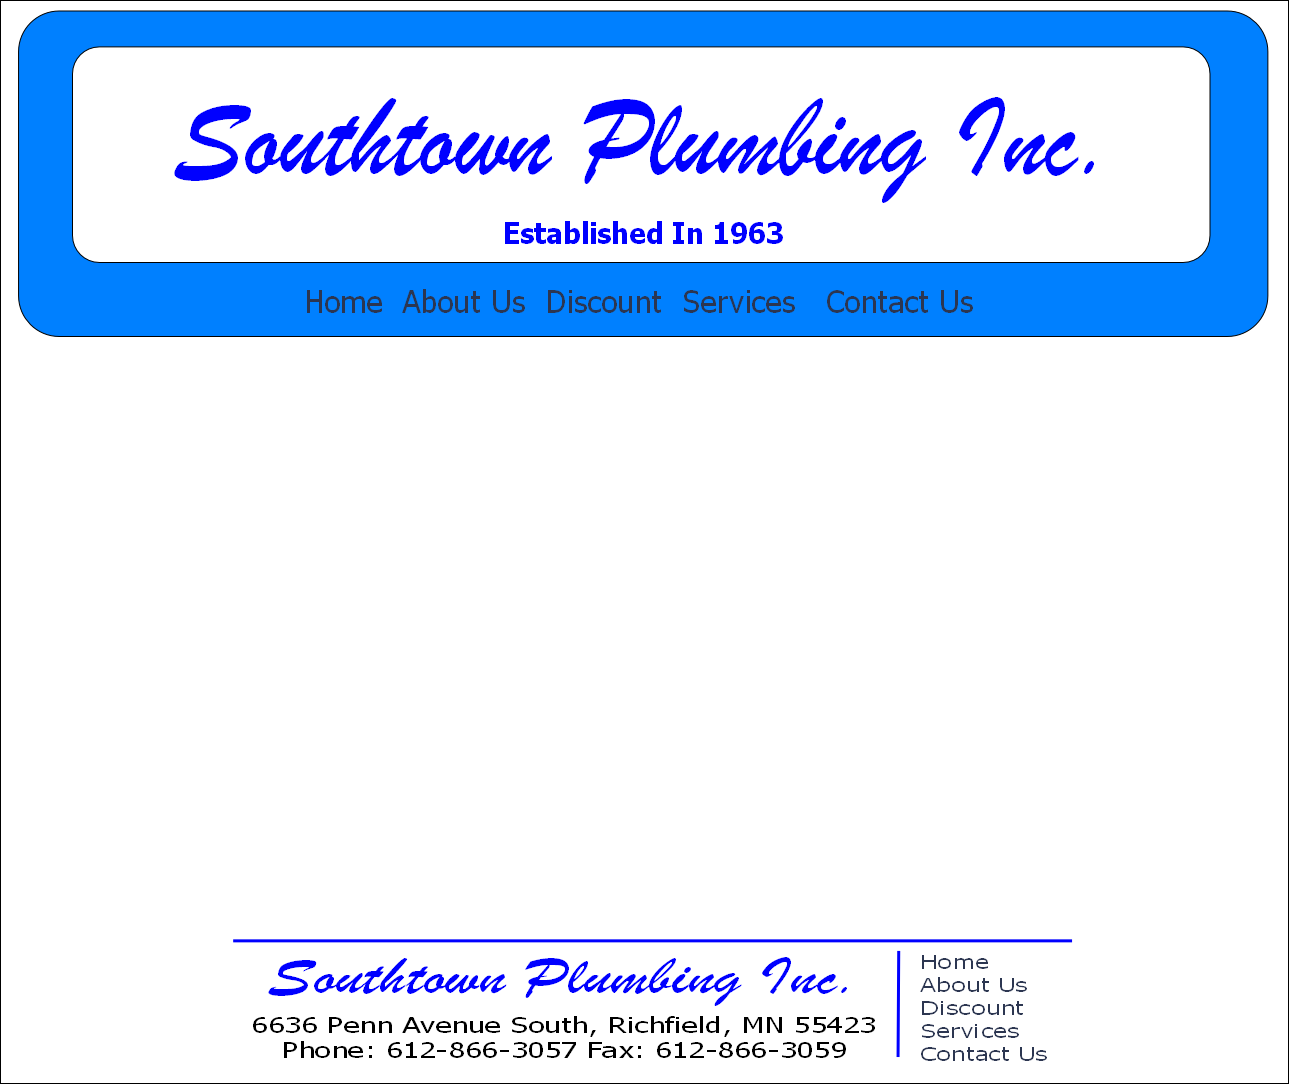 Southtown Plumbing Inc.
6636 Penn Avenue South, Richfield, MN 55423
Phone: 612-866-3057 Fax: 612-866-3059